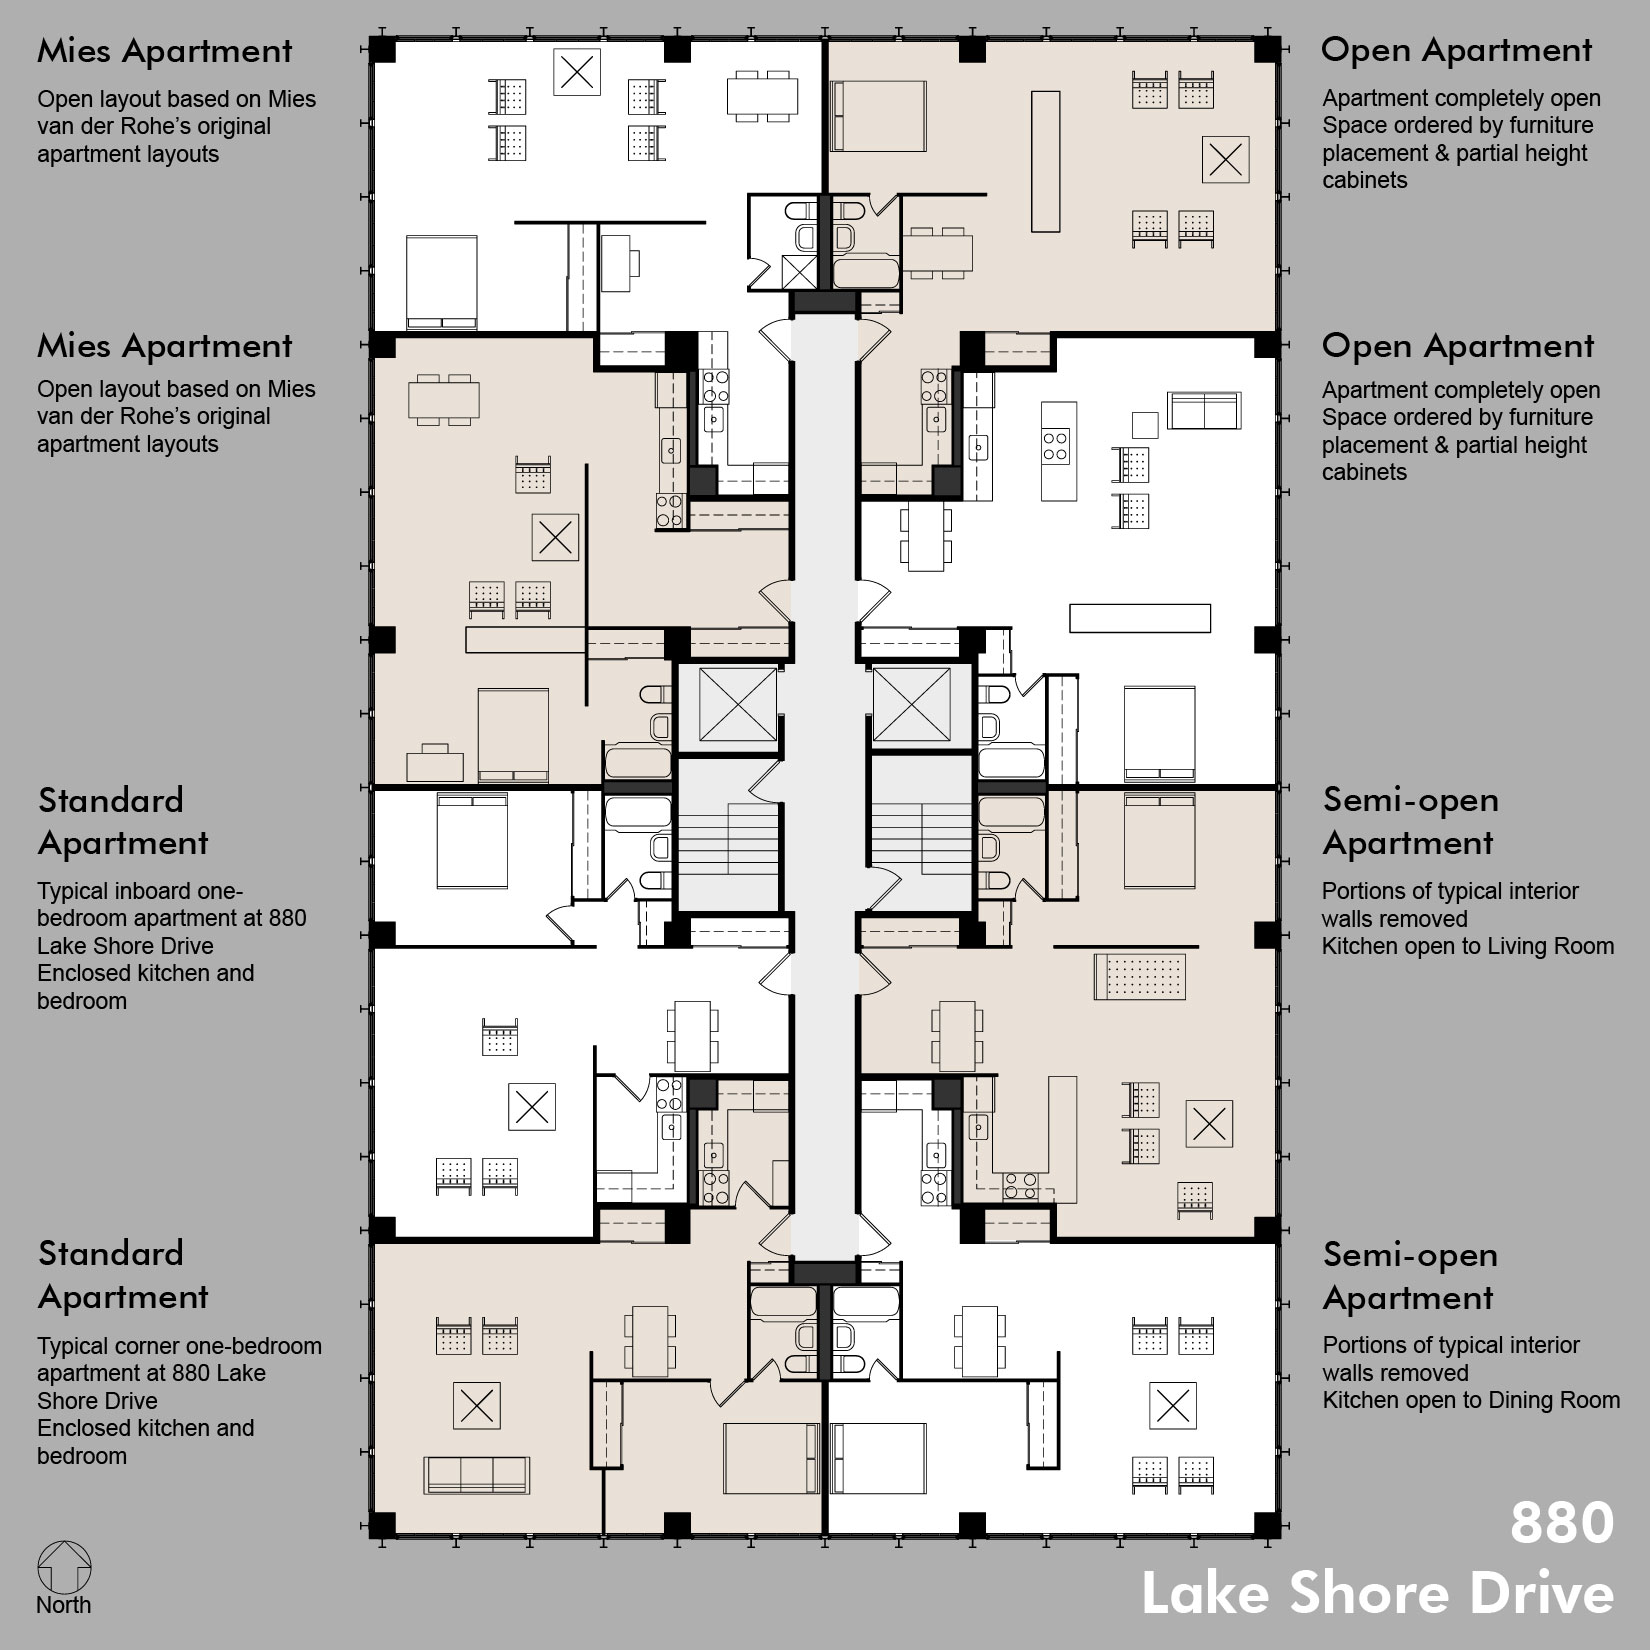 Typical Floor Plan Layout - floorplans.click